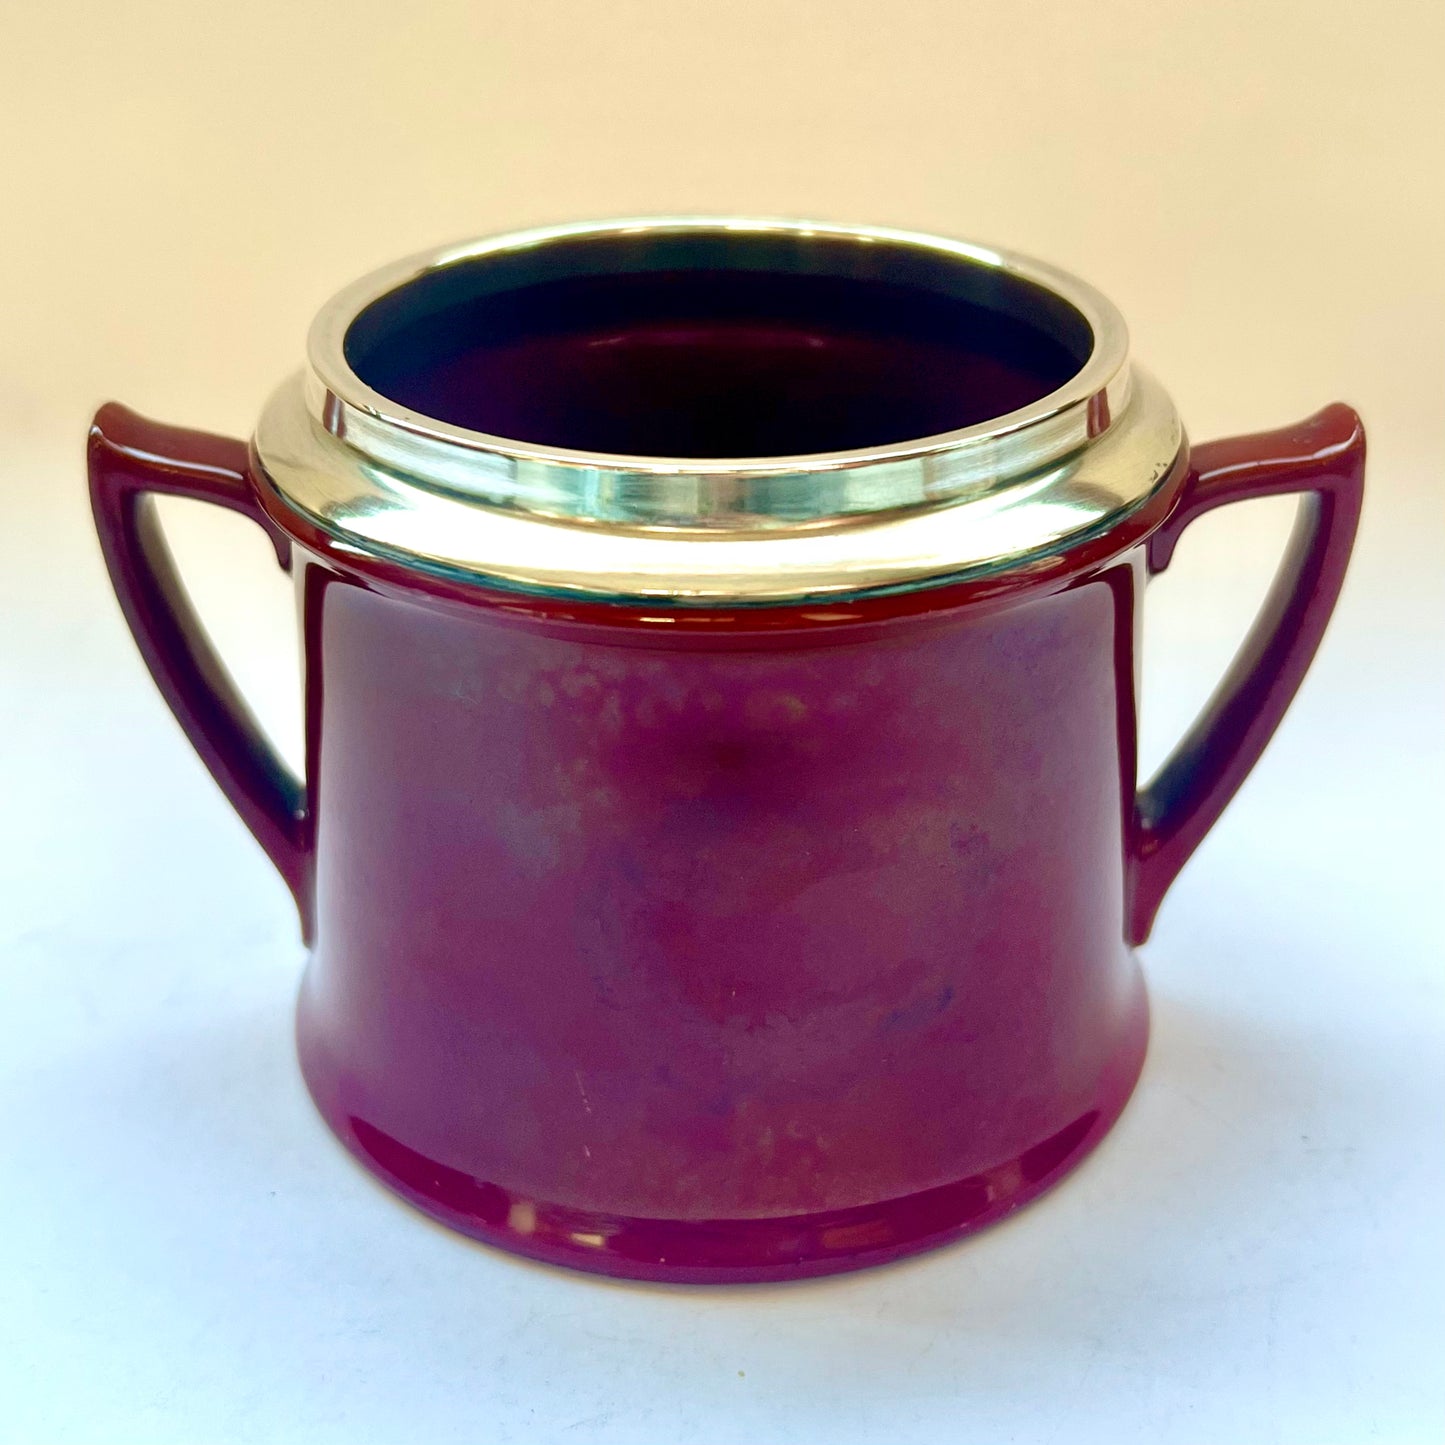 Royal Doulton Flambe twin-handled sugar bowl circa 1908 with sterling silver collar